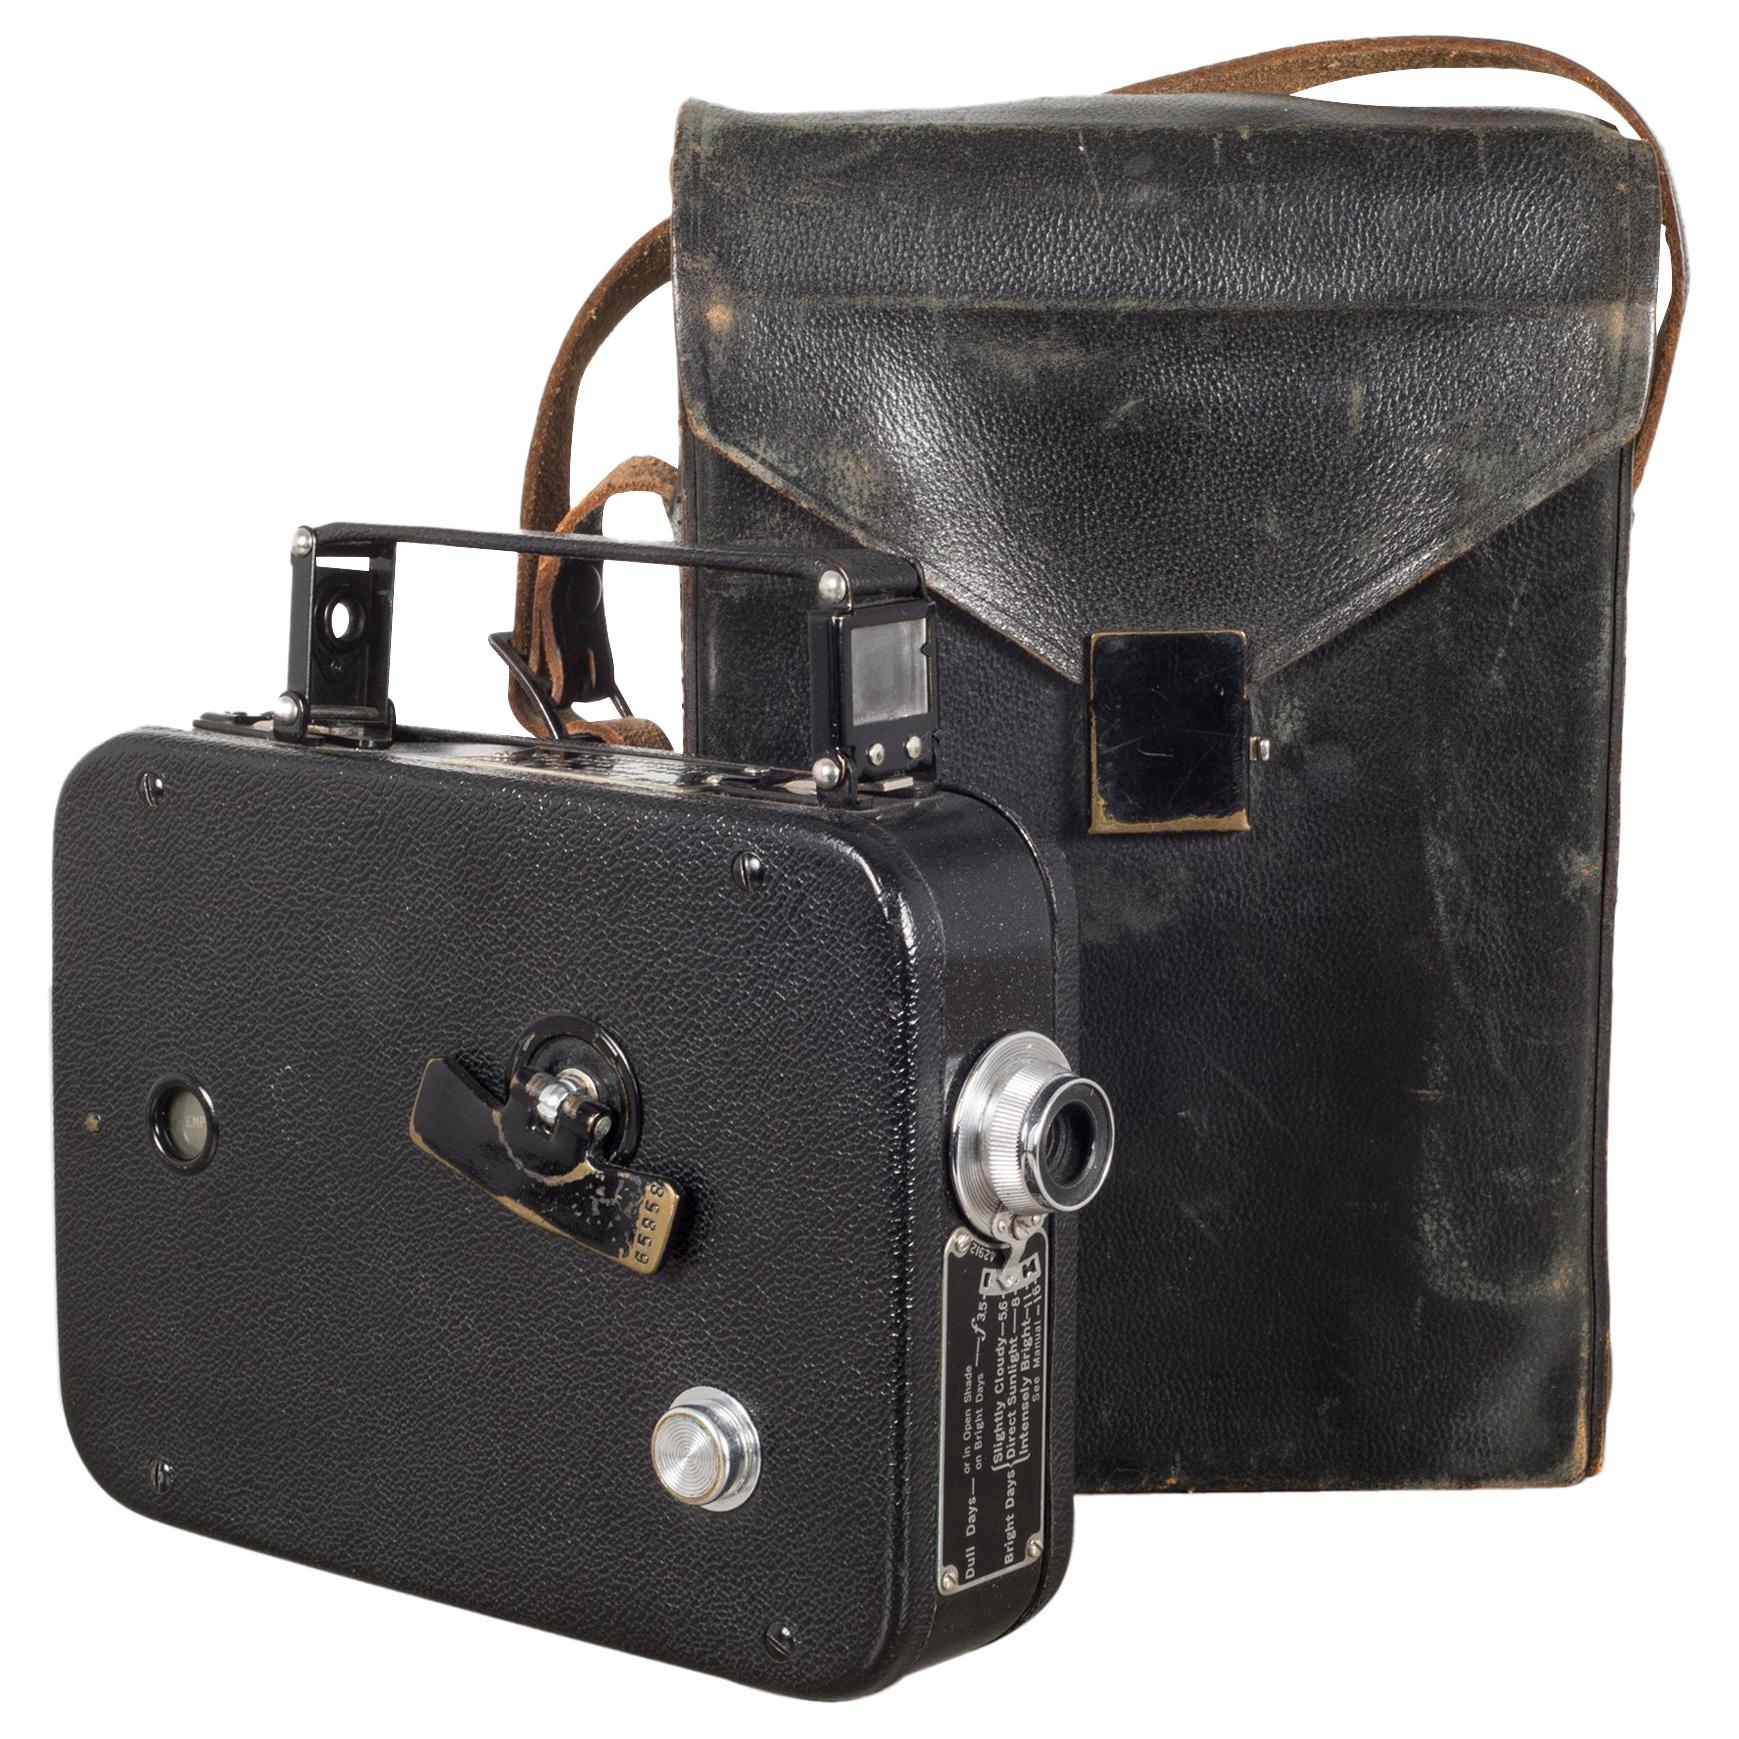 Cine-Kodak Movie Camera and Leather Case, circa 1950